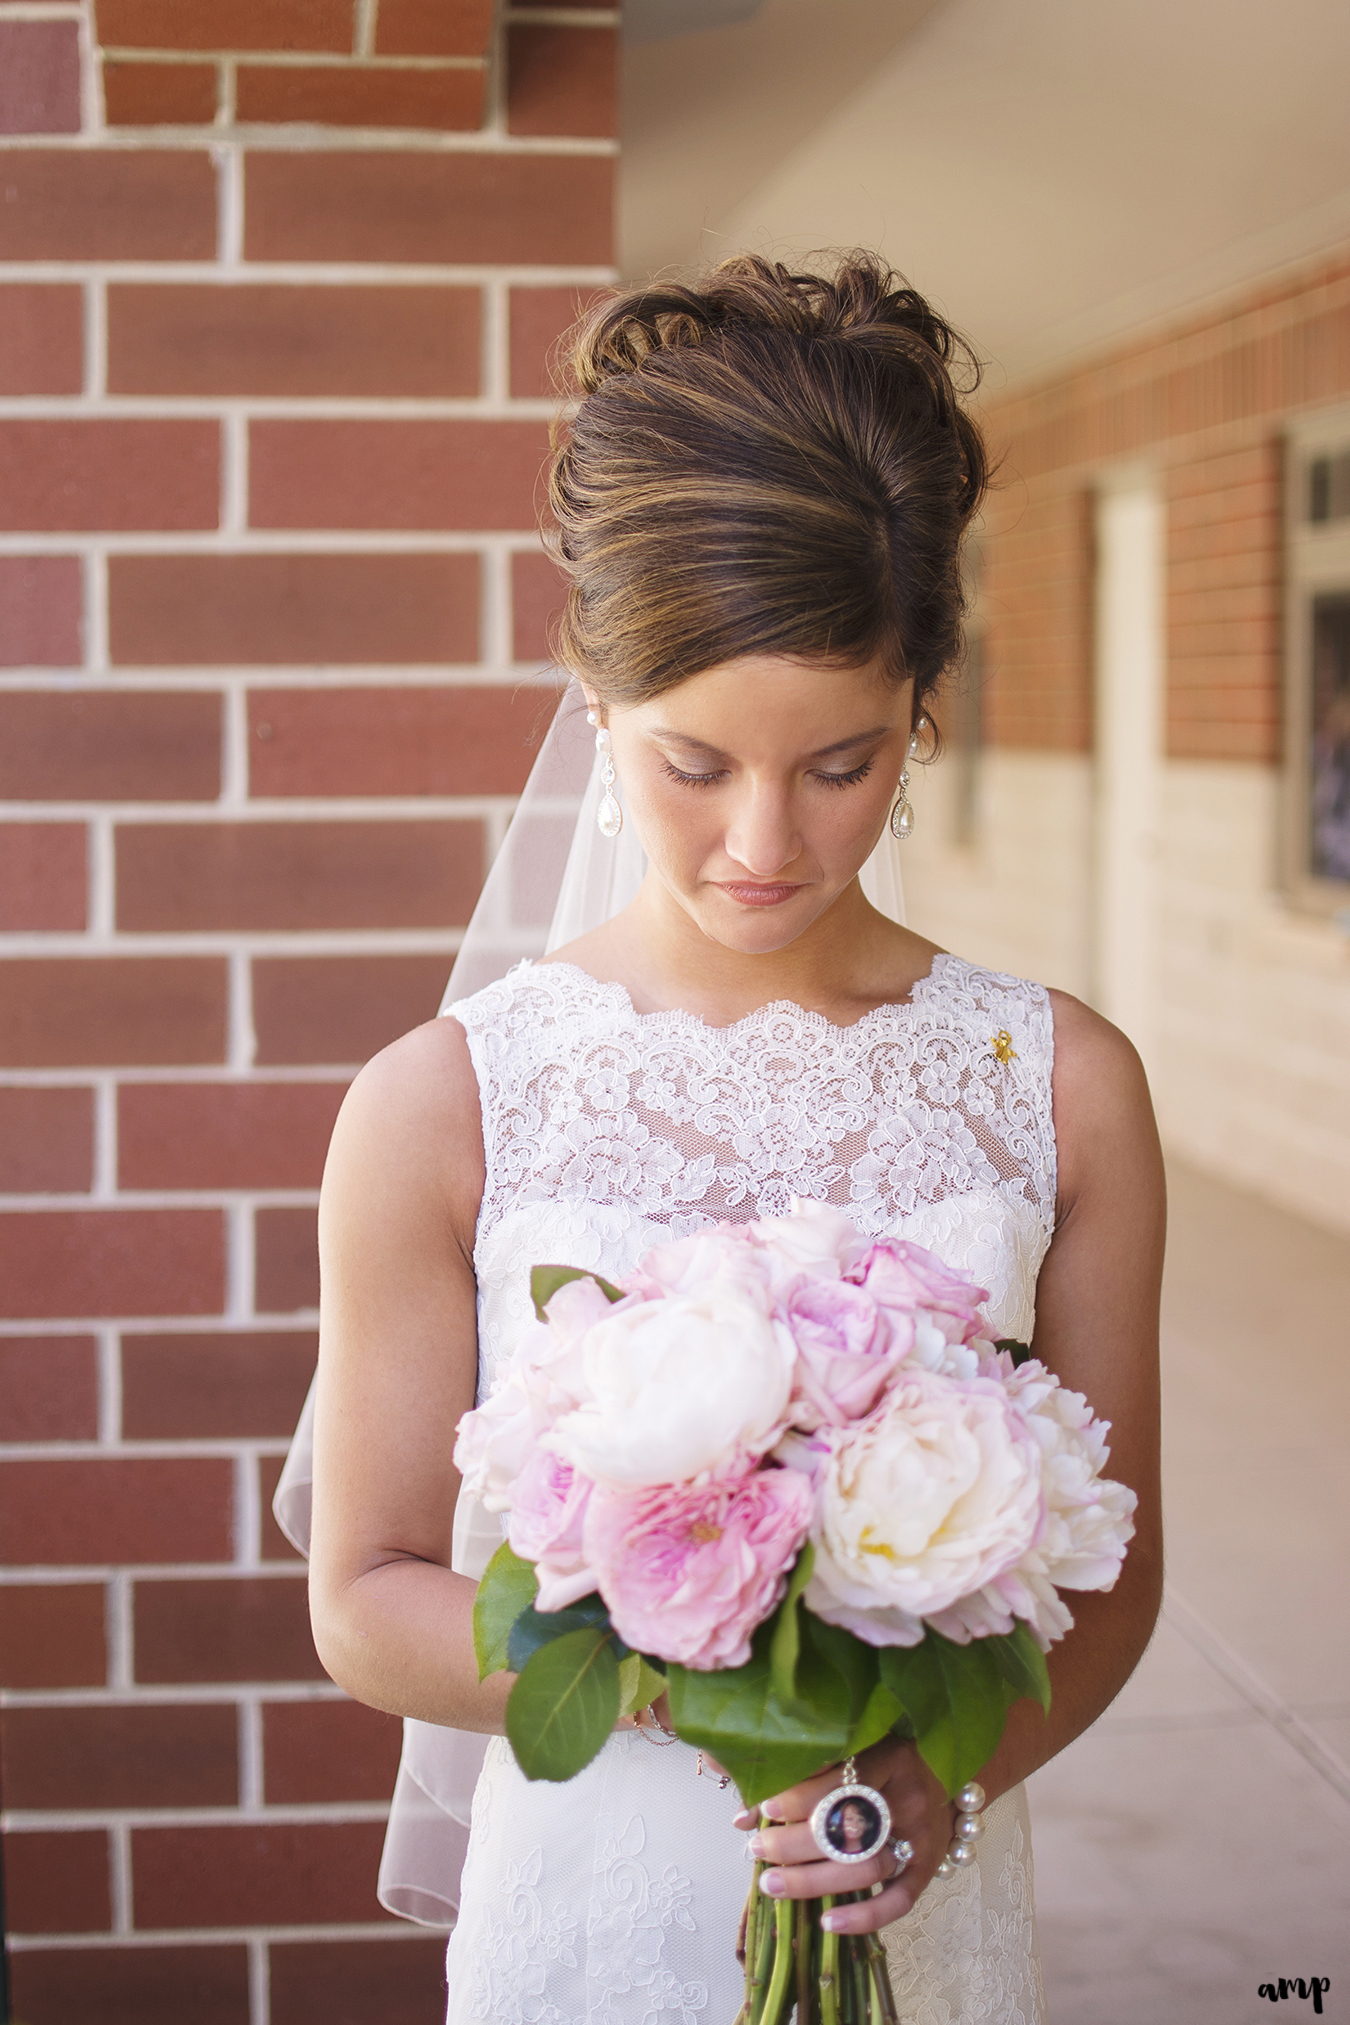 Bride with her pink wedding bouquet